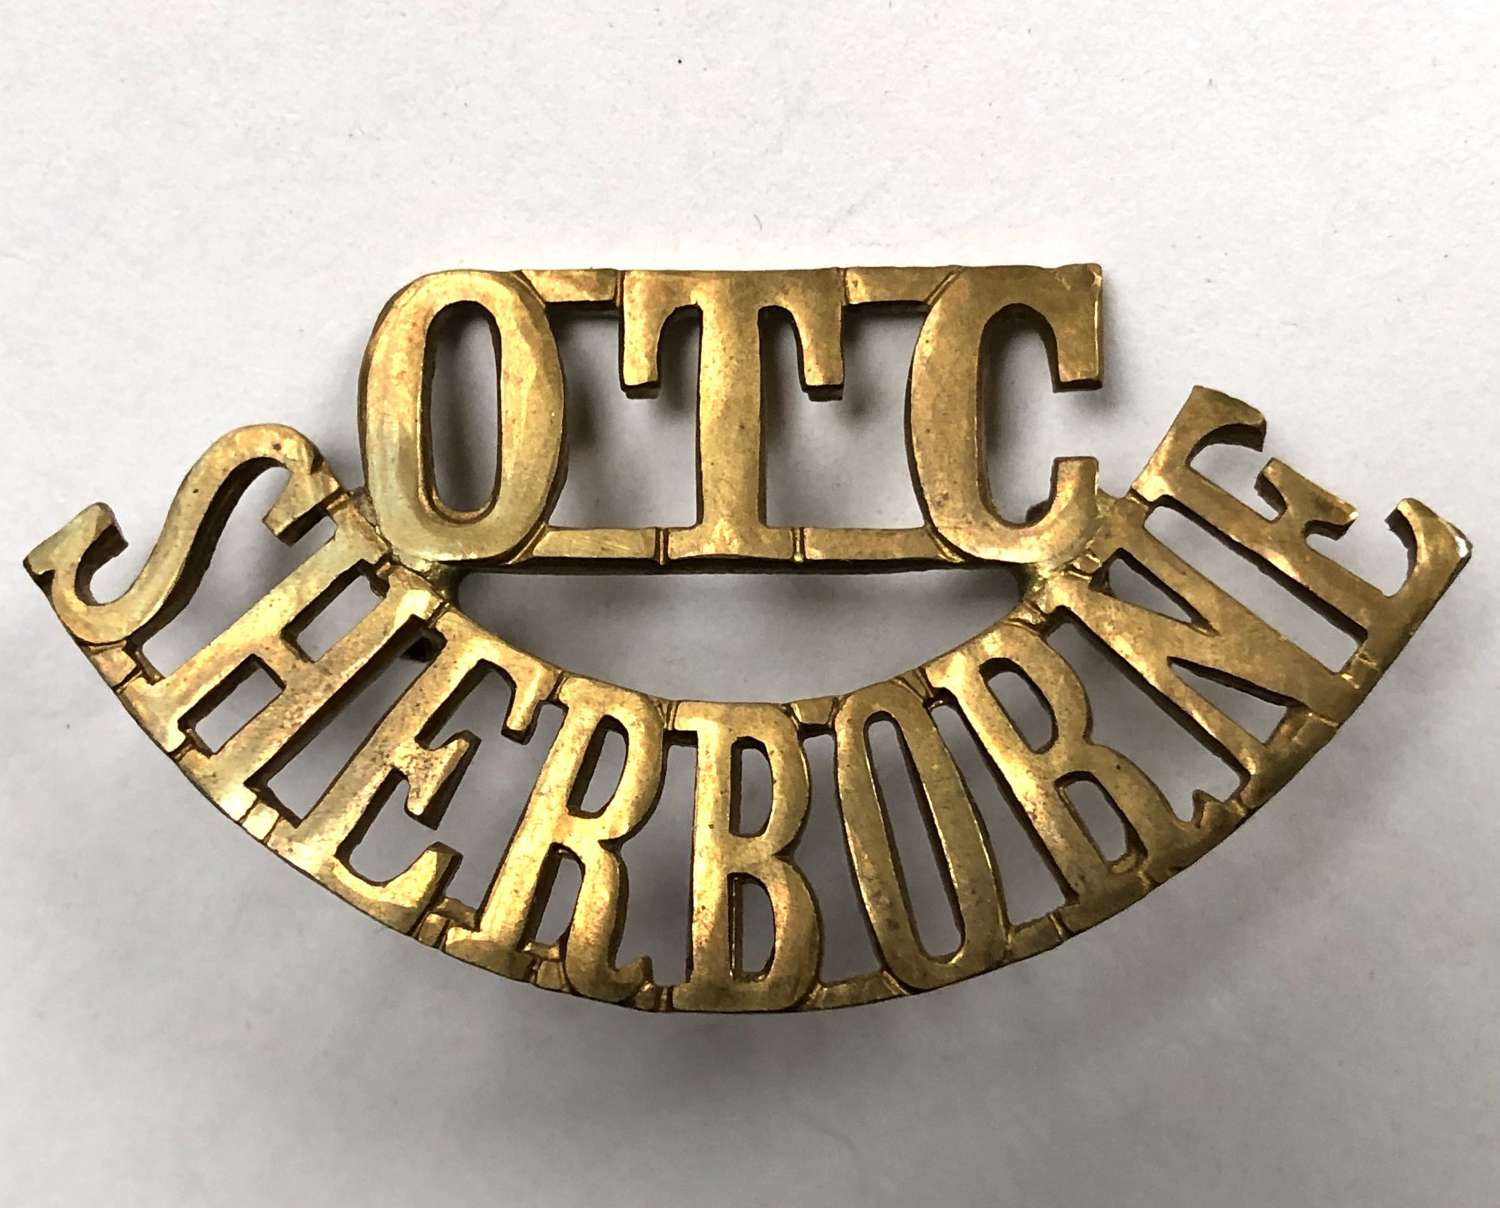 OTC / SHERBORNE Dorset shoulder title c1908-40